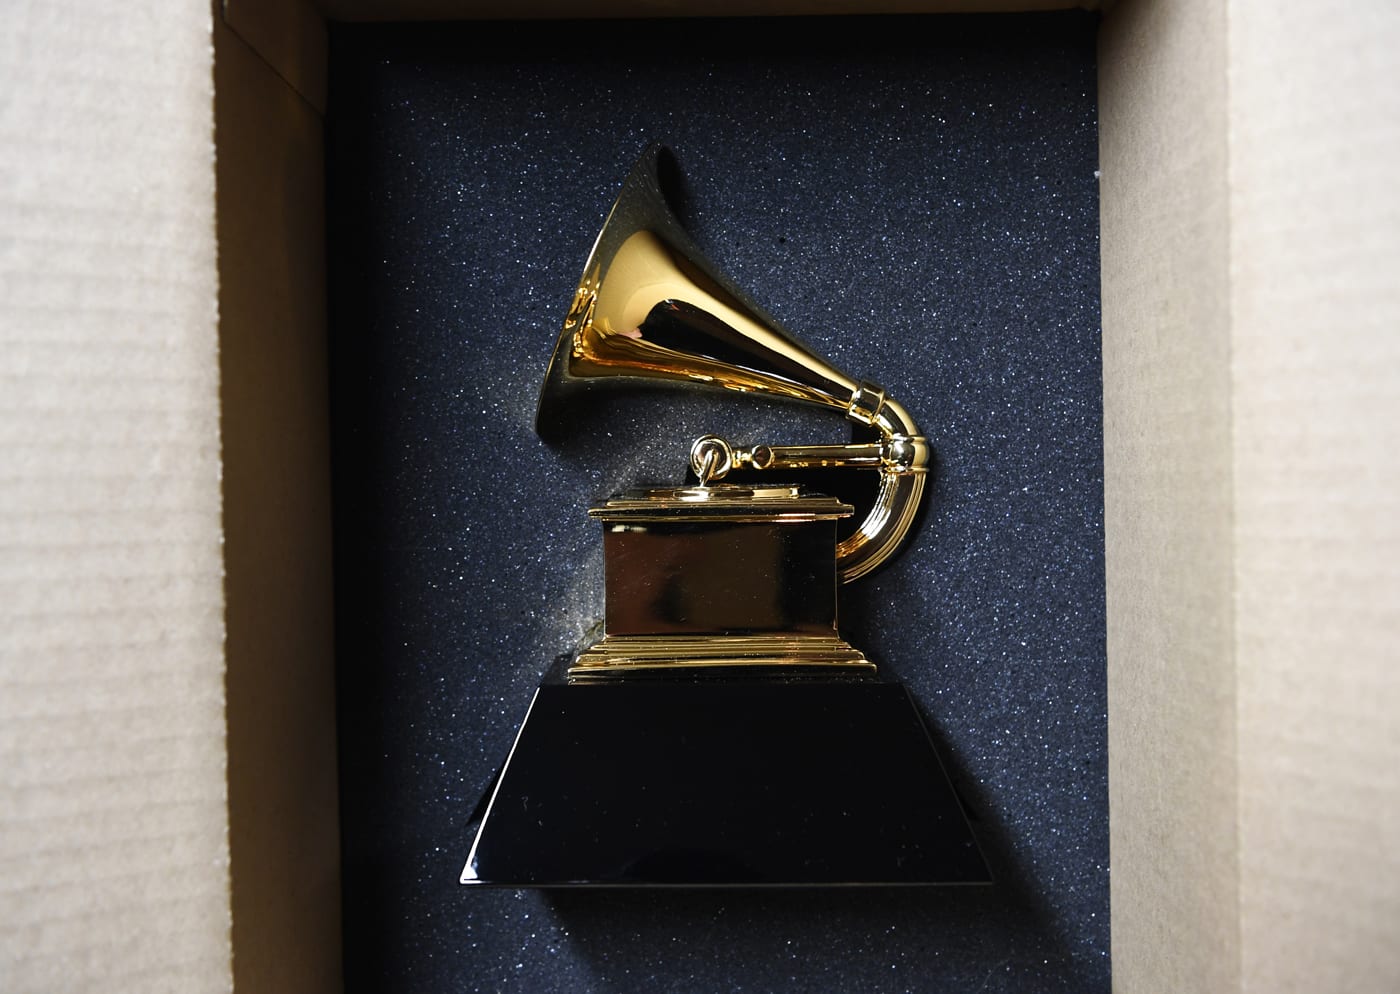 Grammy award 2020